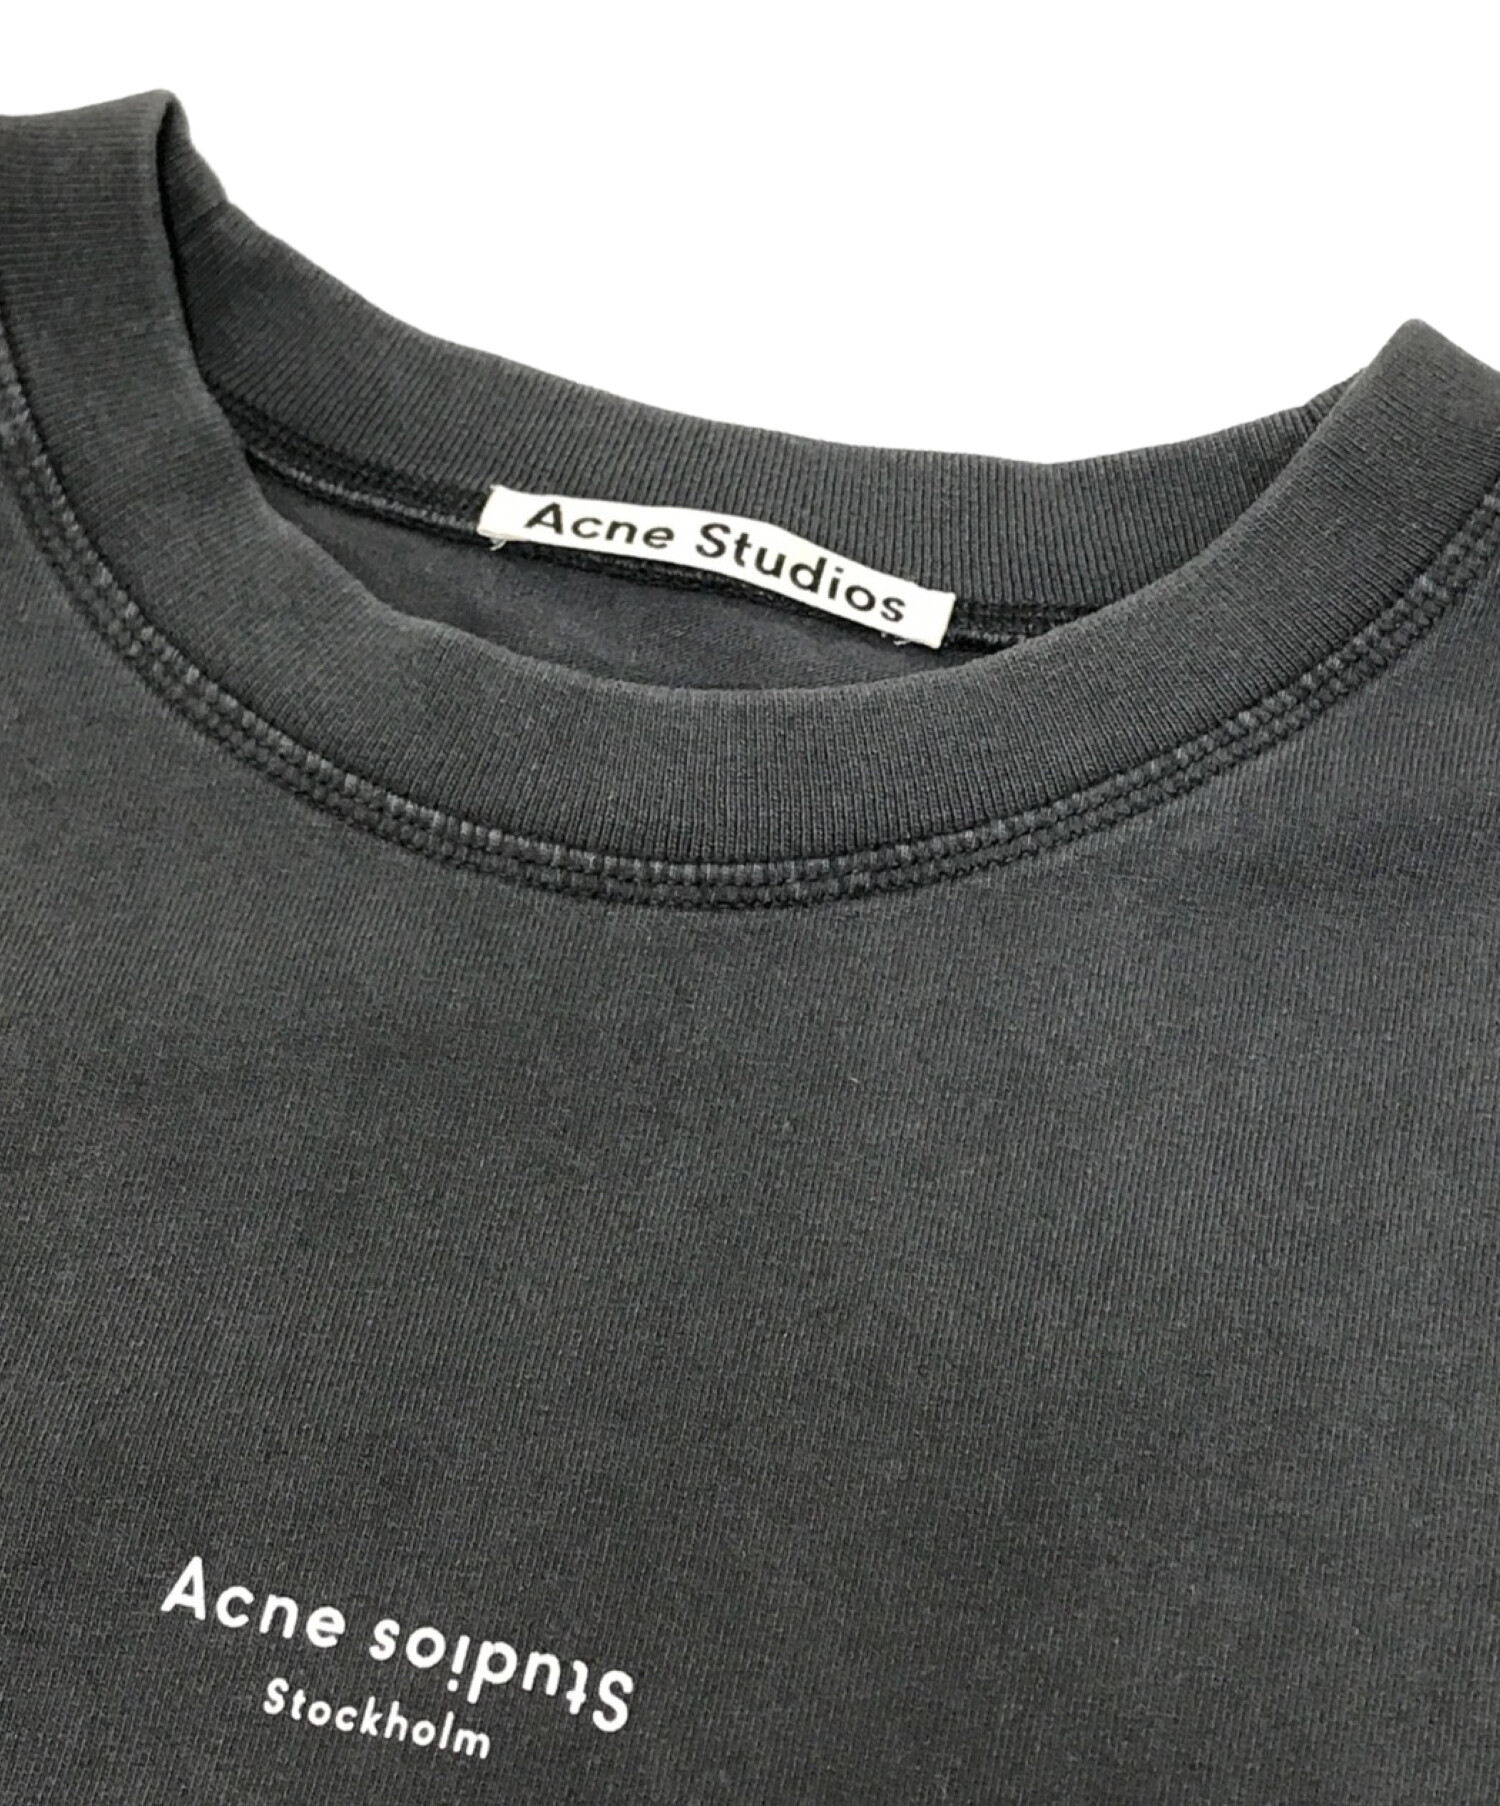 Acne studios (アクネストゥディオス) ロゴプリントTシャツ グレー サイズ:S